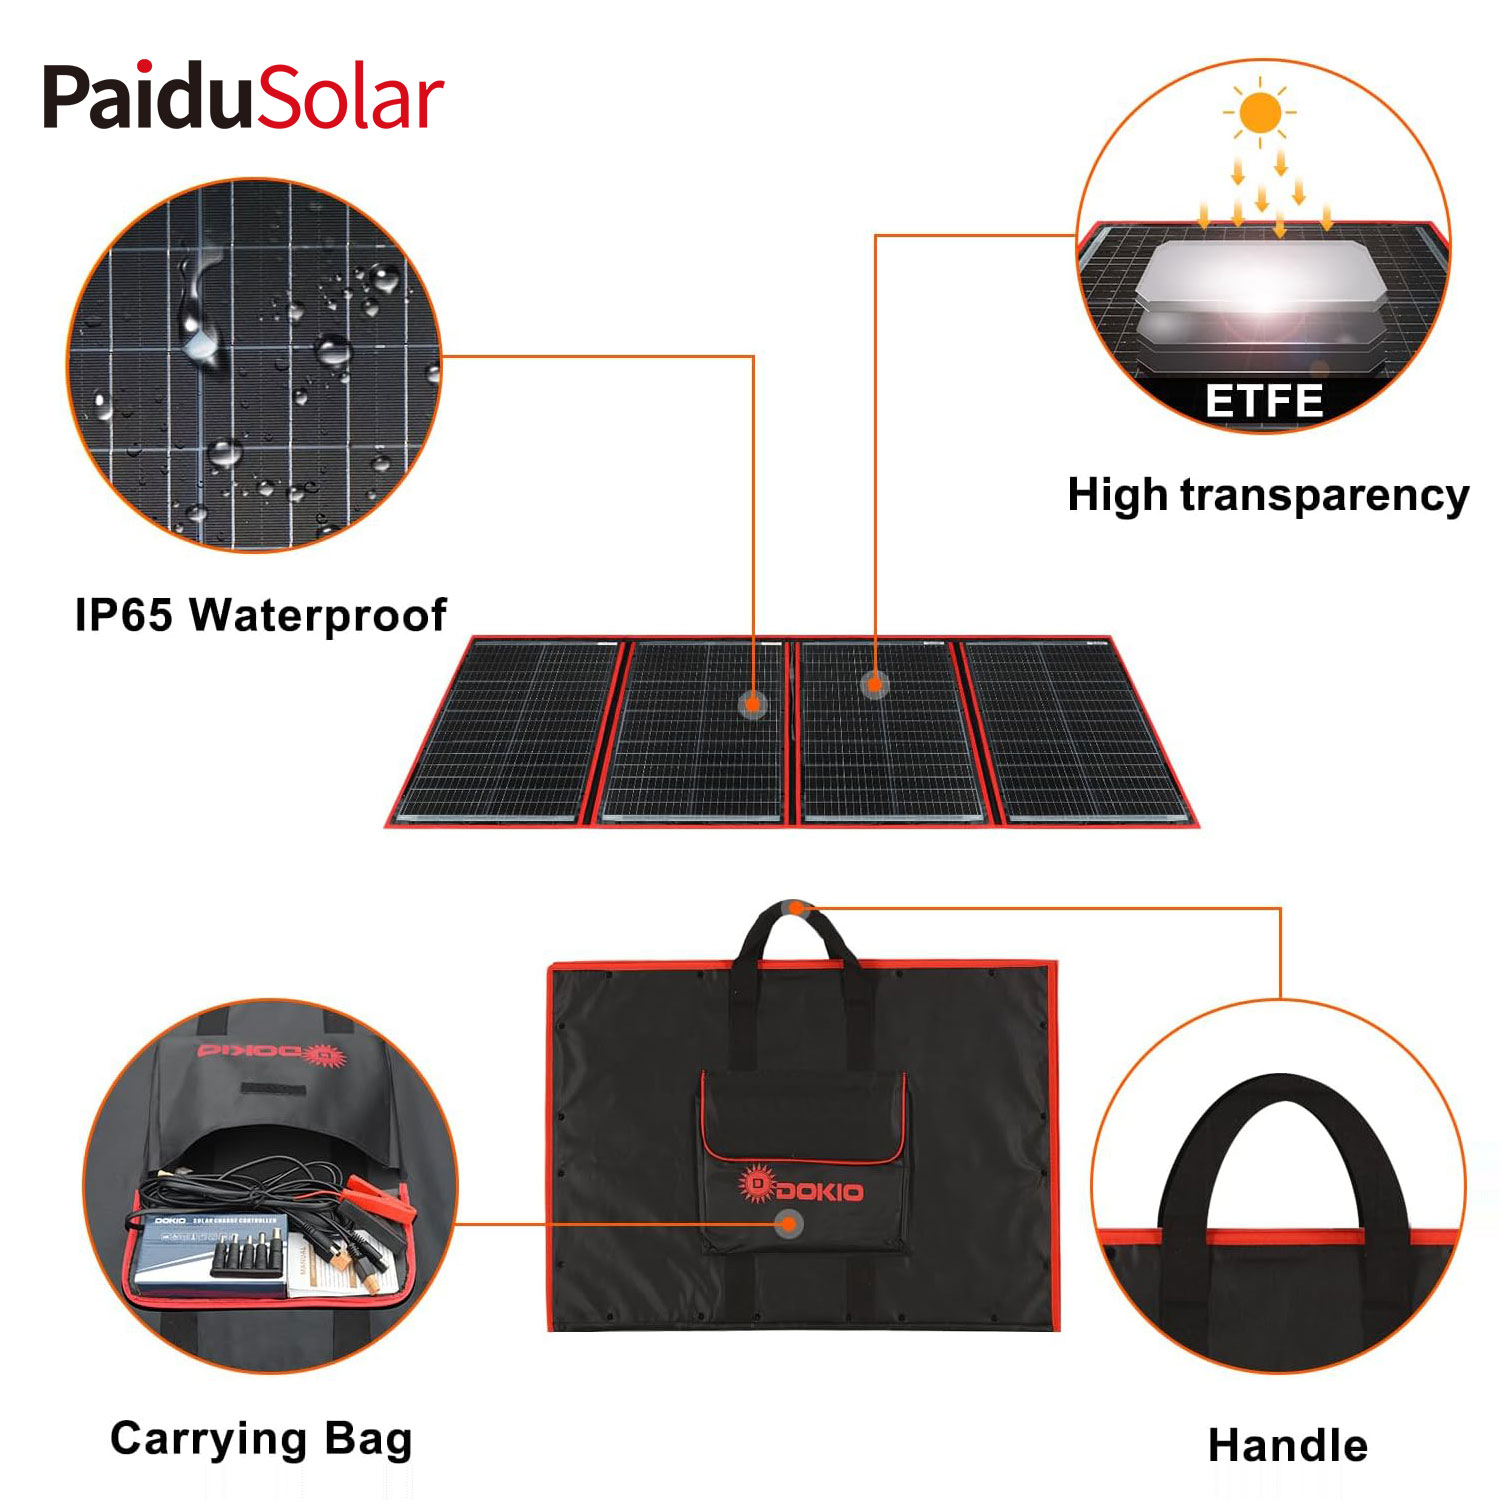 PaiduSolar 220w 18v Portable Foldable Solar Panel Kit For Rv Camping Trailer Emergency Power